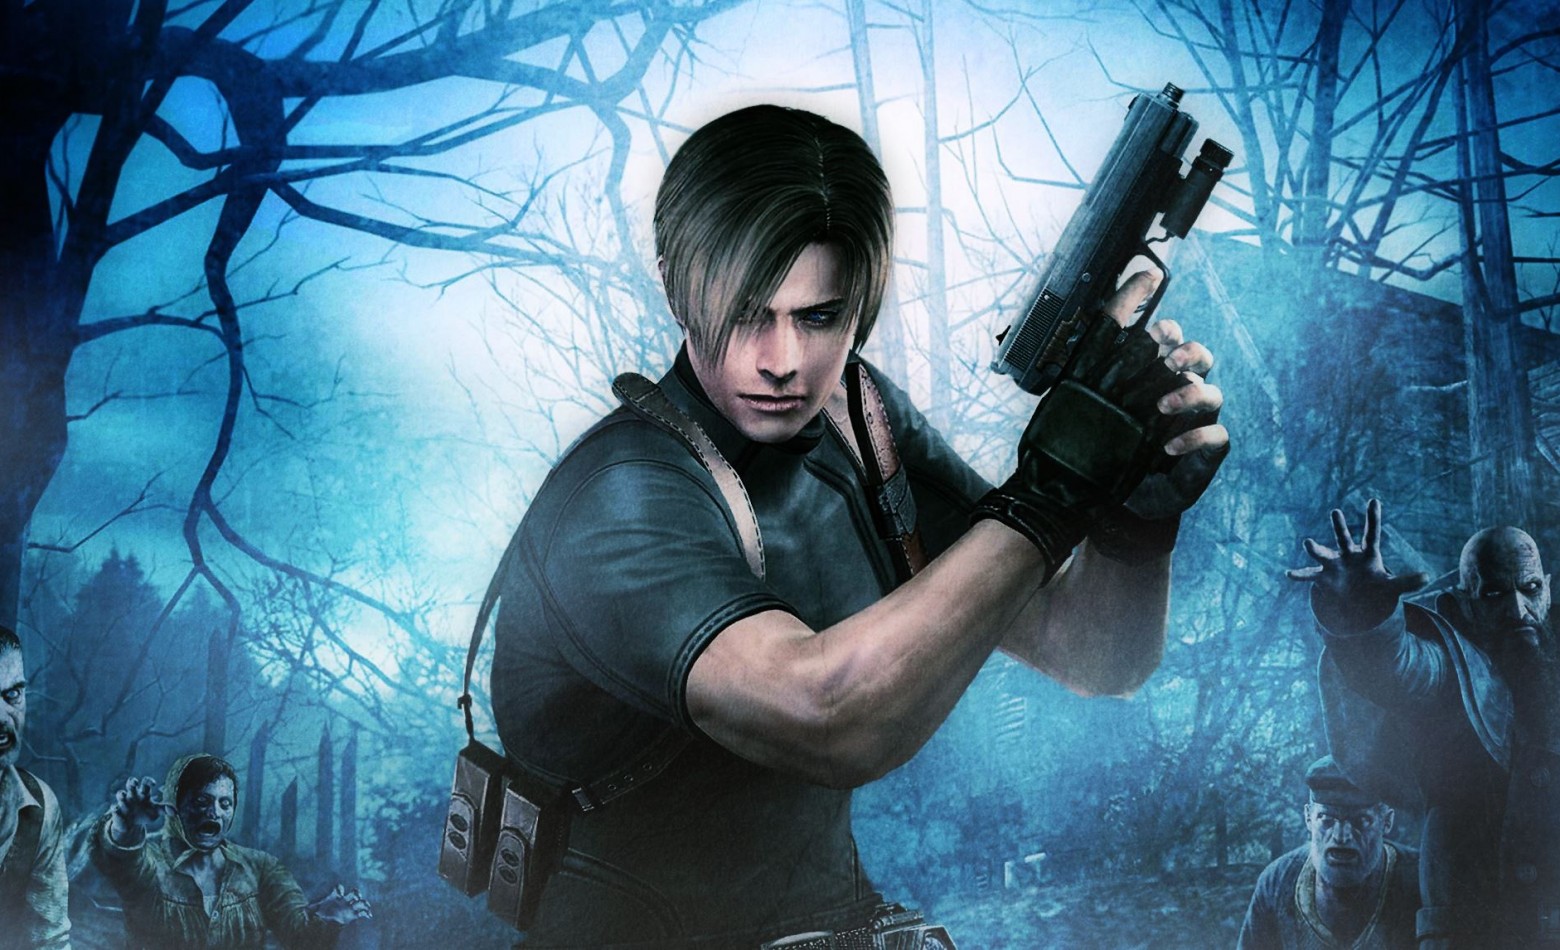 Maratona de Resident Evil 4 continua nesta quinta